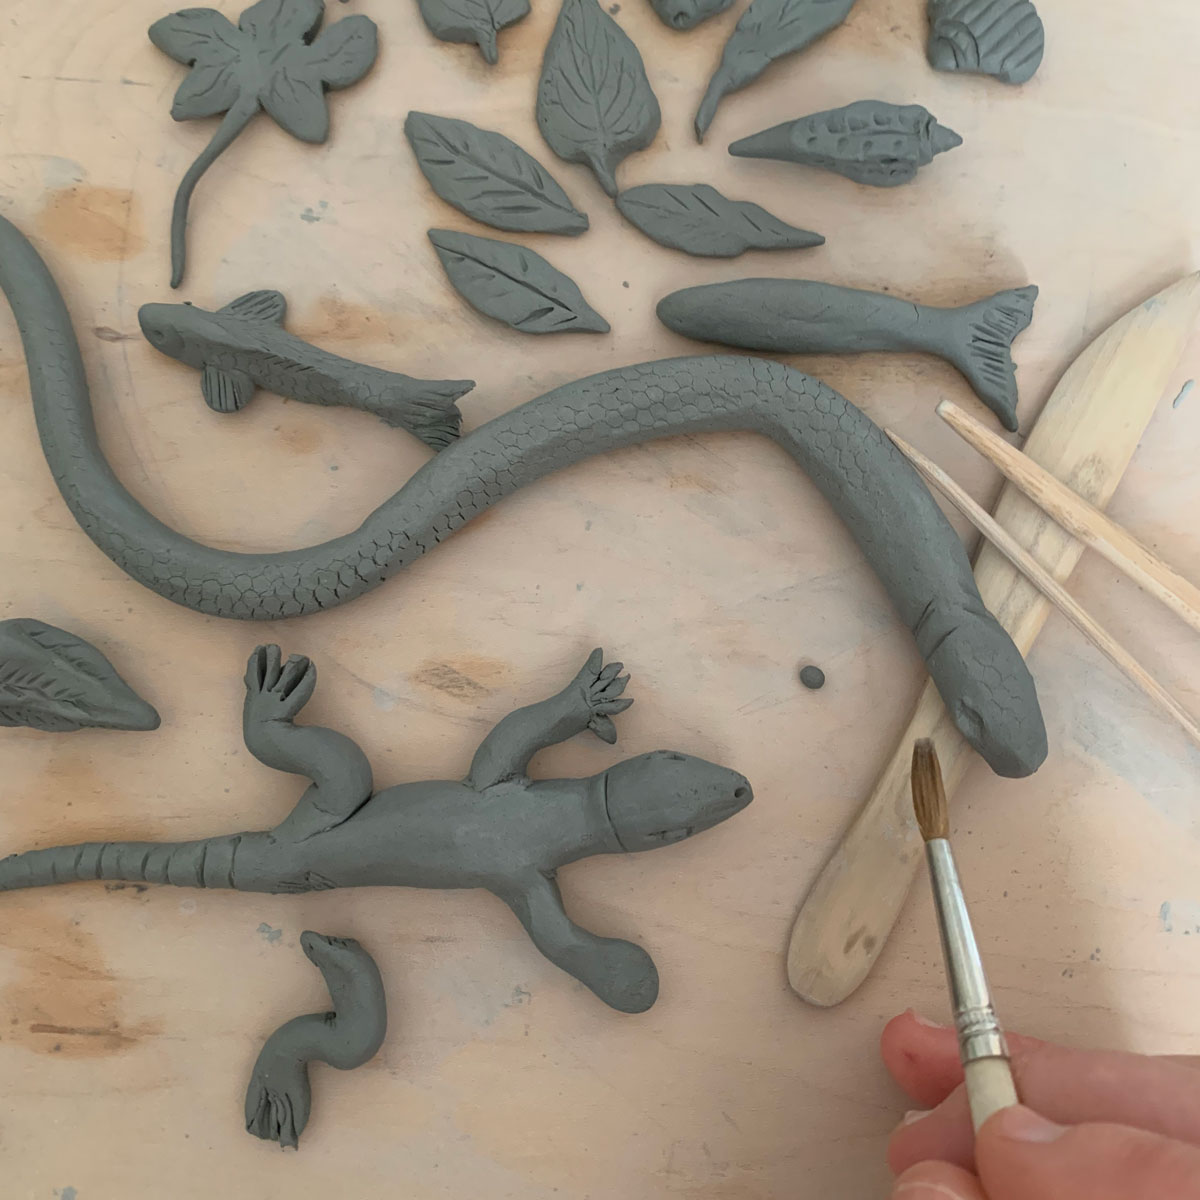 Clay snake, lizard, a leaves